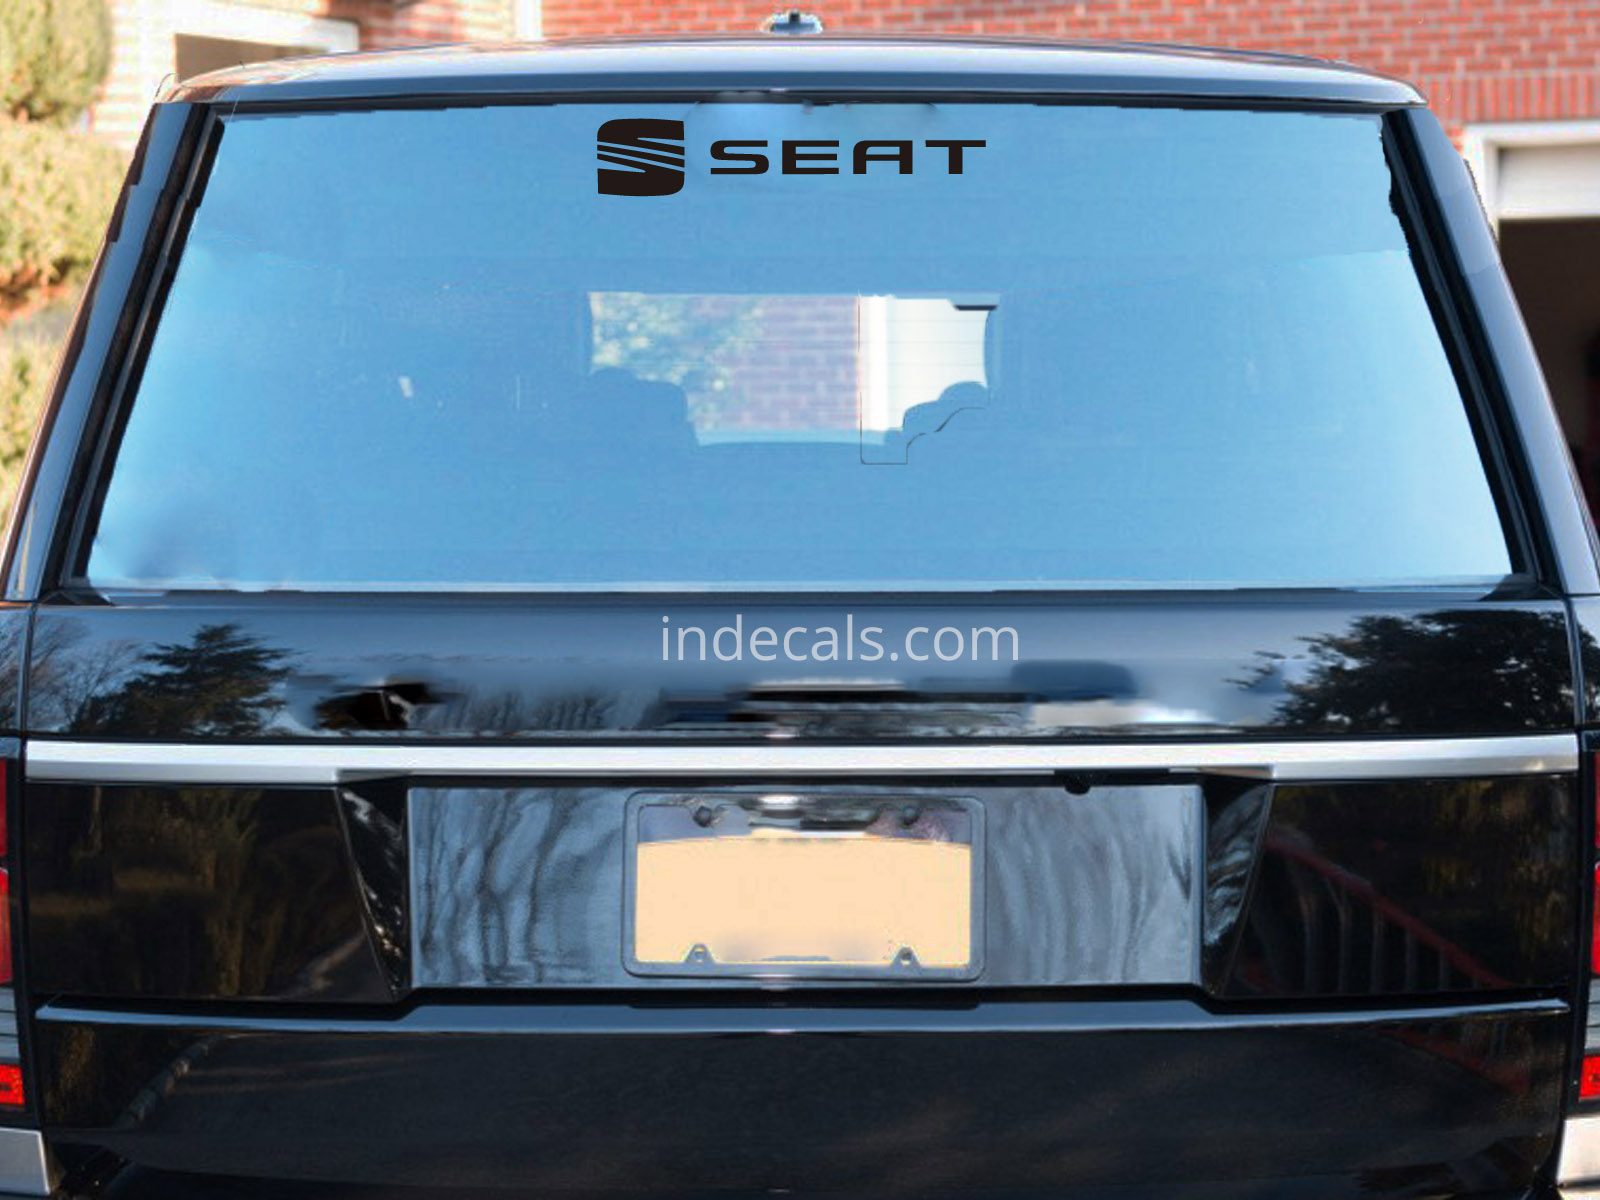 1 x Seat Sticker for Windshield or Back Window - Black